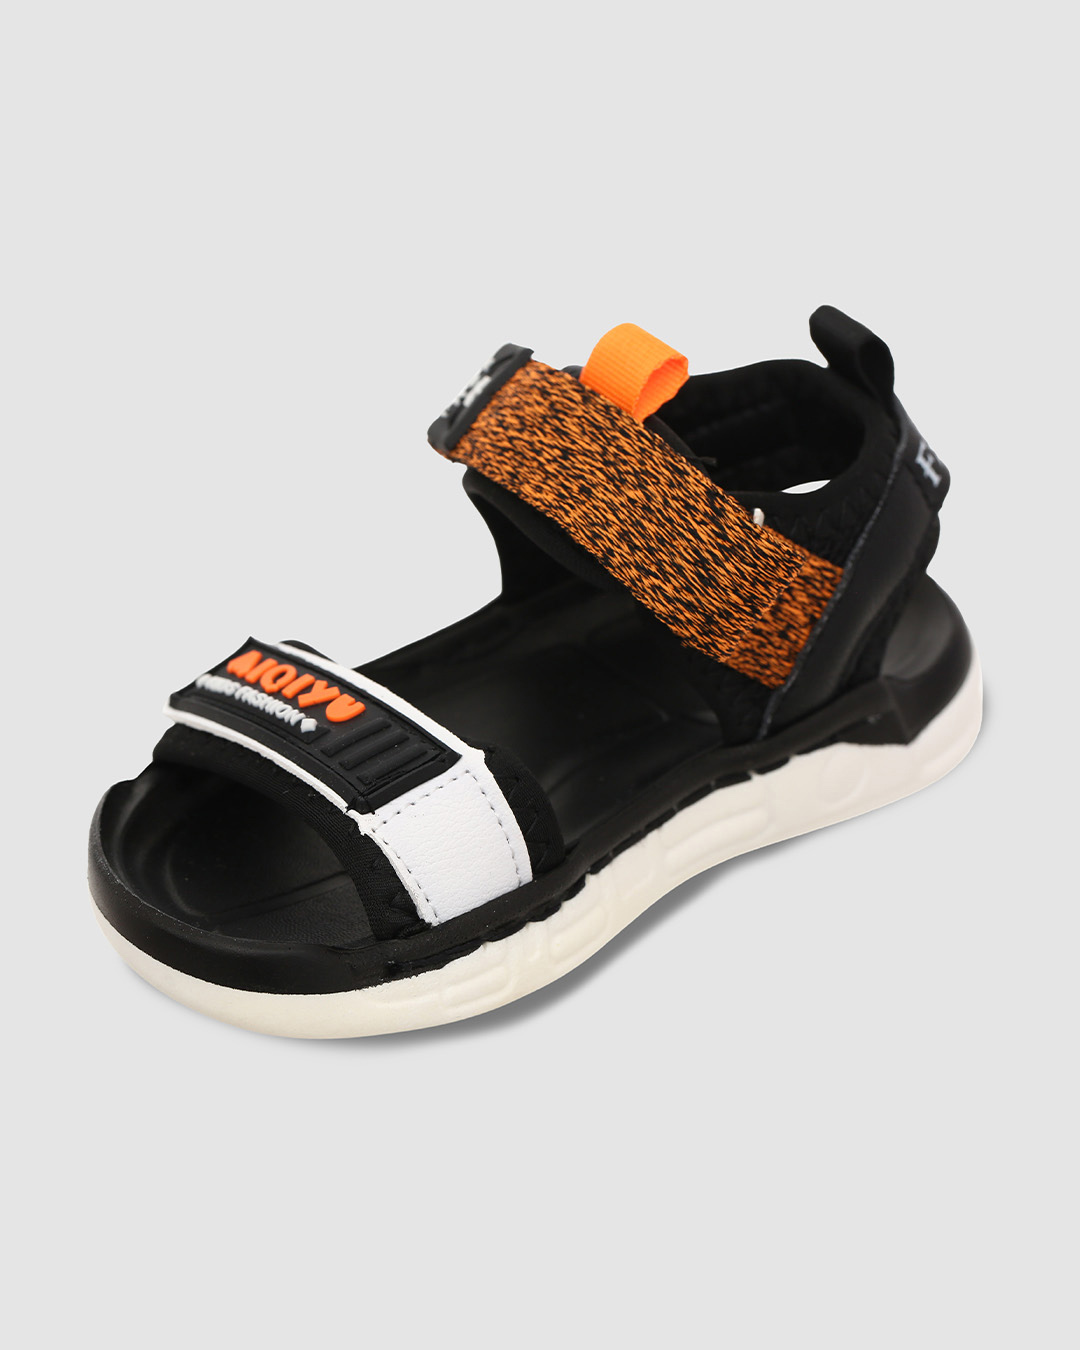 Giày sandal Avakids AC6 màu cam - đen